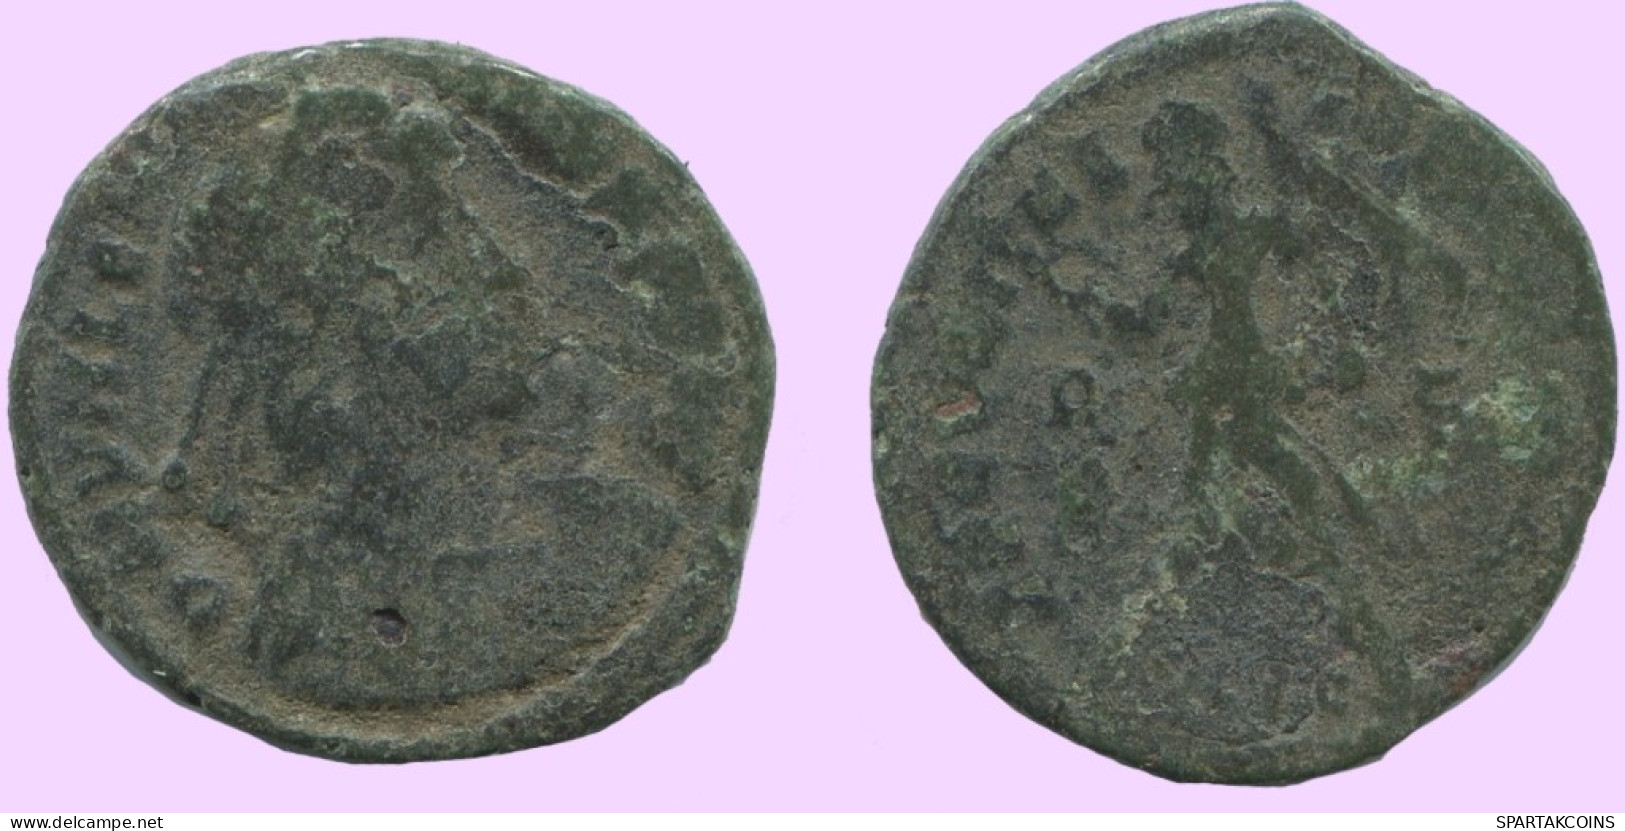 LATE ROMAN EMPIRE Follis Antique Authentique Roman Pièce 2.4g/18mm #ANT2097.7.F.A - Der Spätrömanischen Reich (363 / 476)